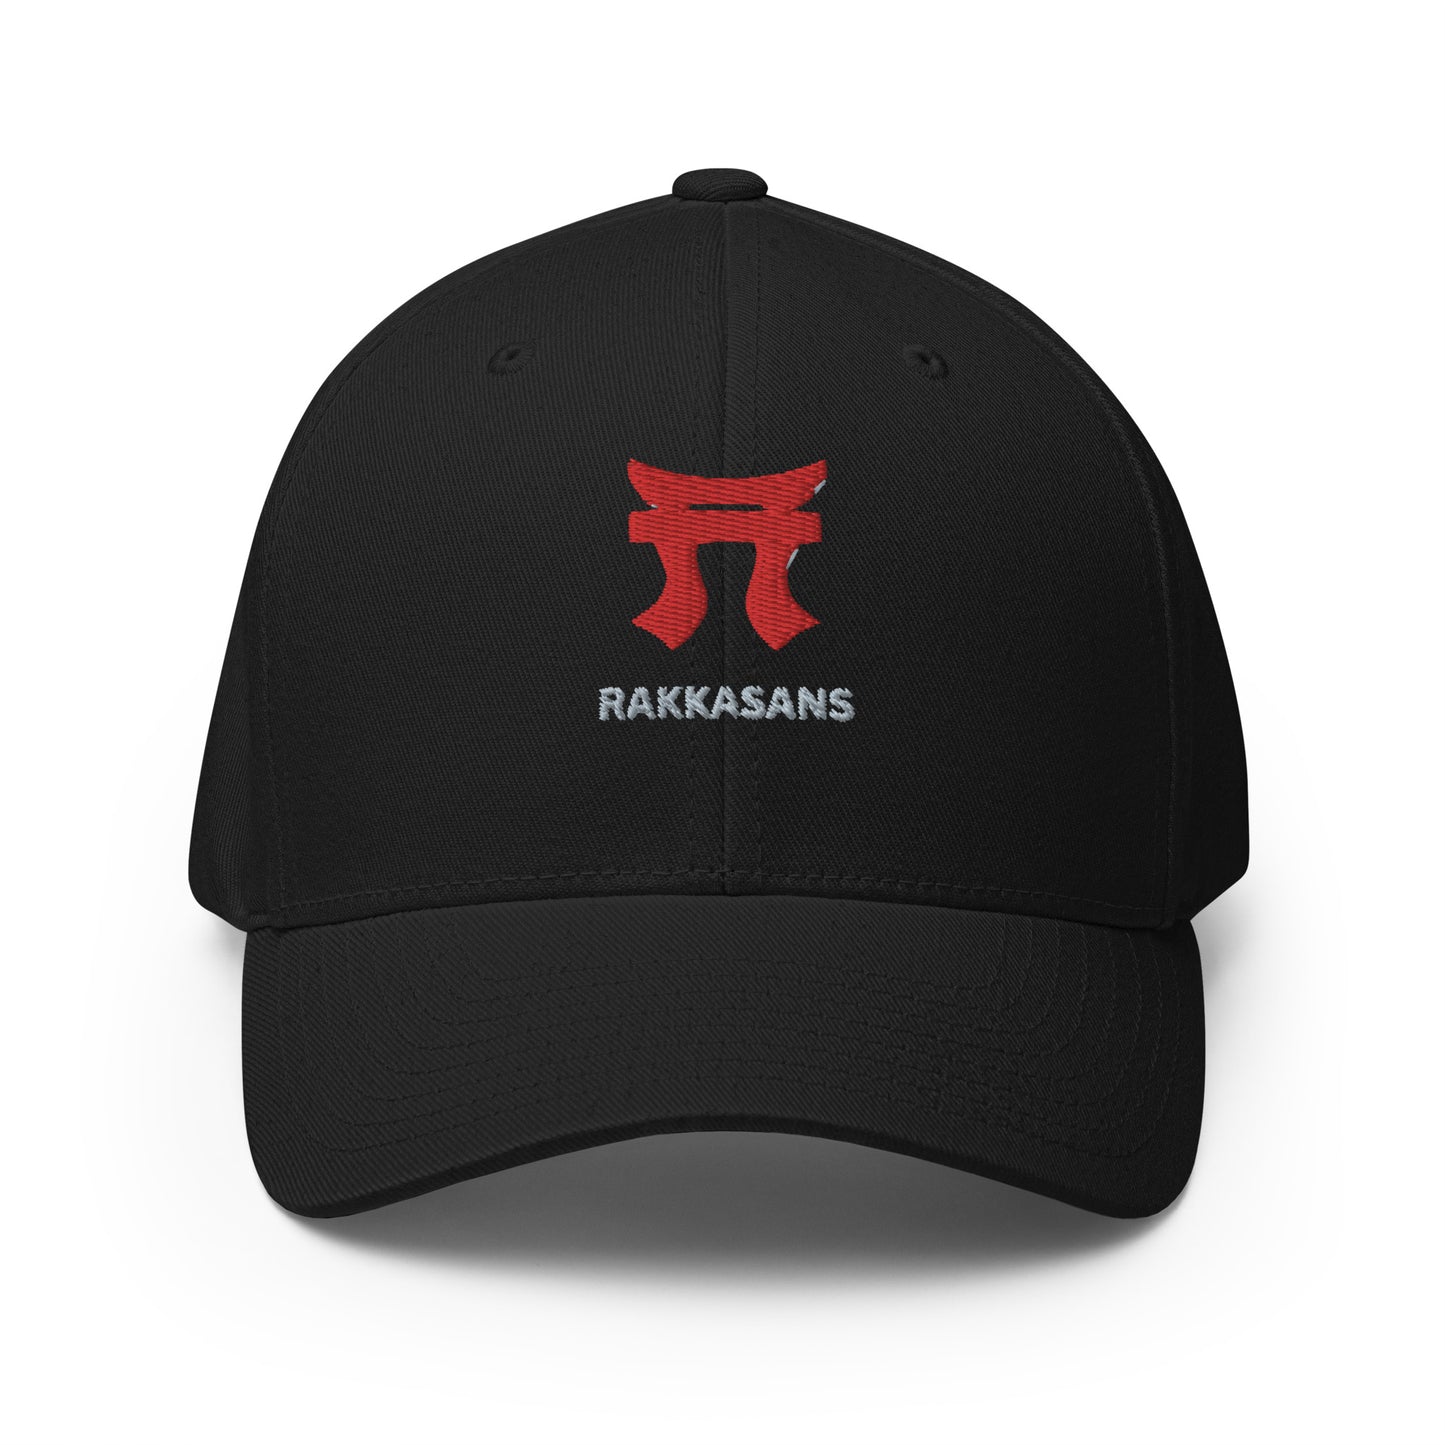 Rakkgear "Rakkasans" Black Embroidered Fitted Baseball Cap: Multicam black cap with iconic Rakkasans Logo embroidery on the